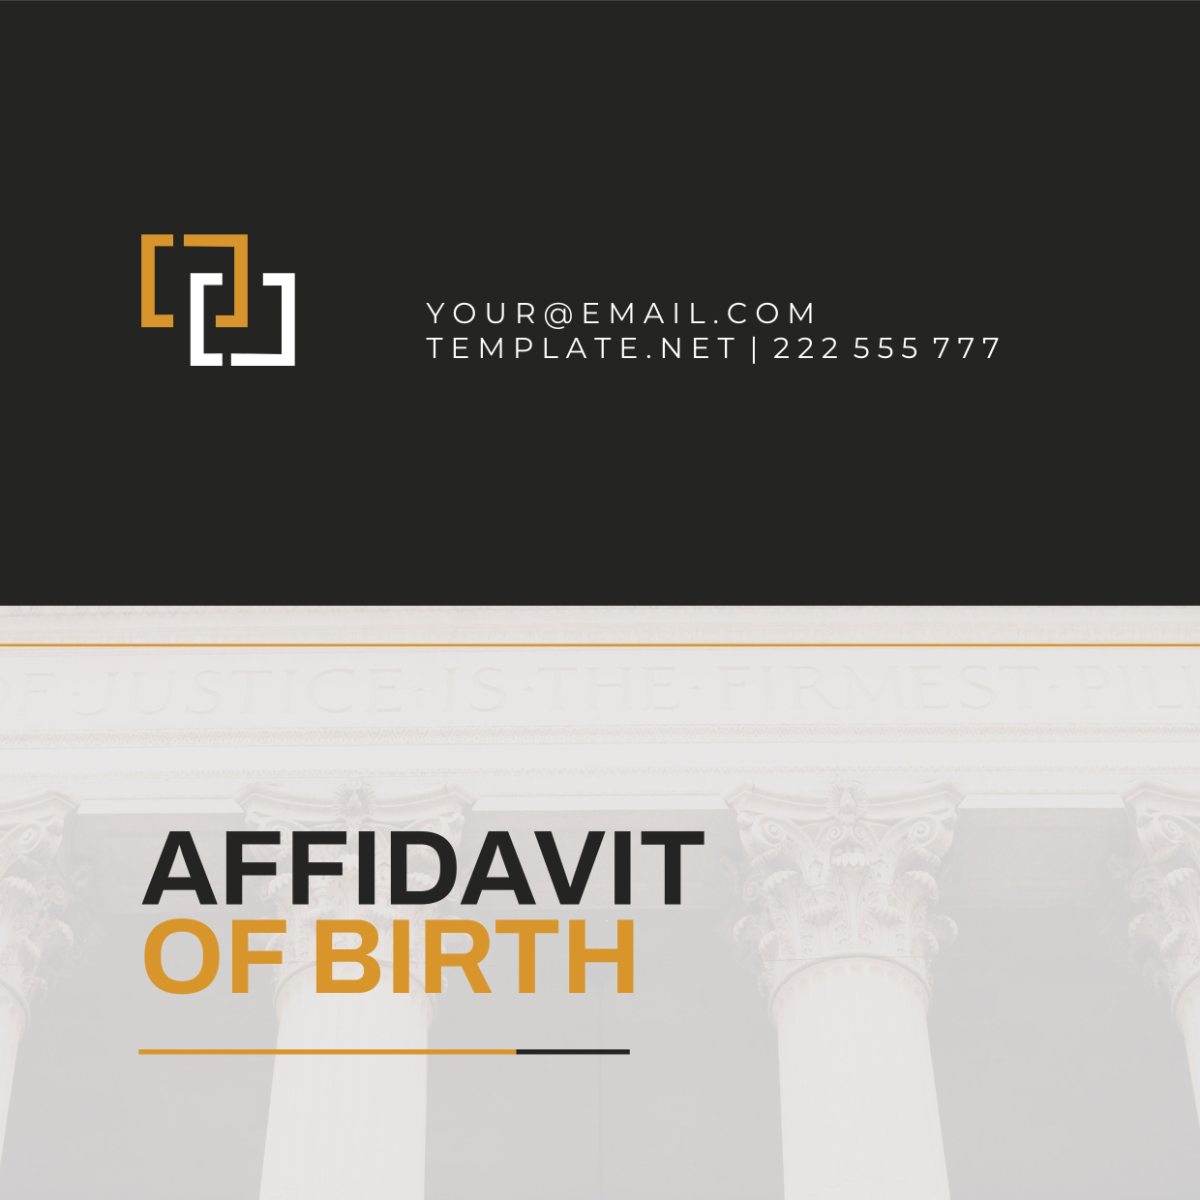 Self Affidavit of Birth Template